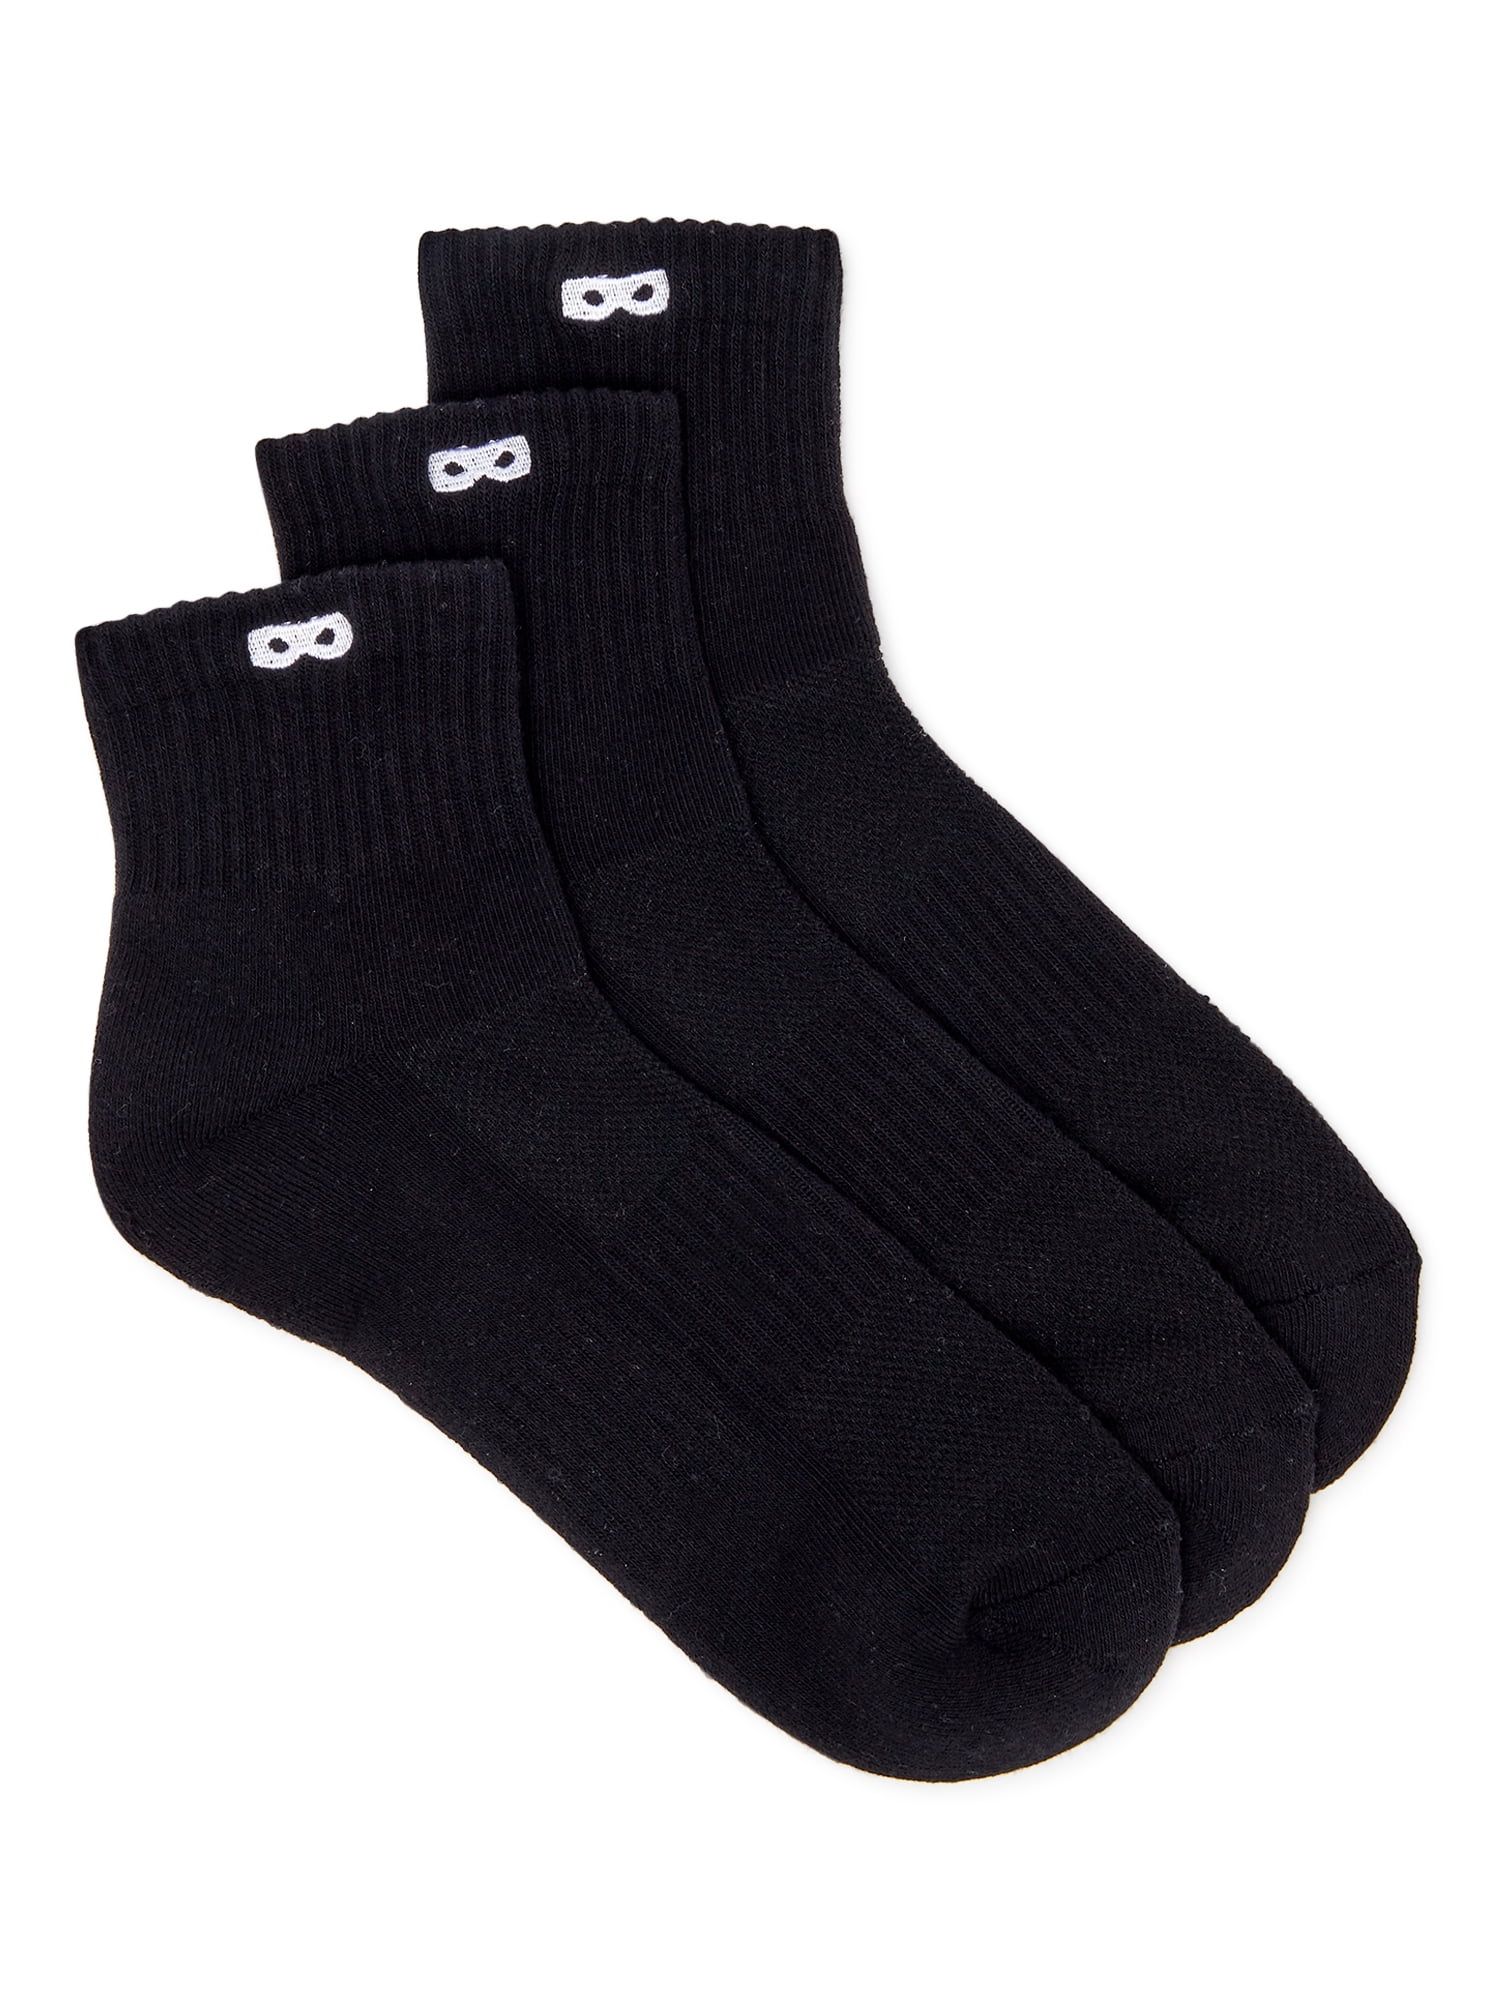 MXRX Black Socks size 10-13 Adult        3841000 